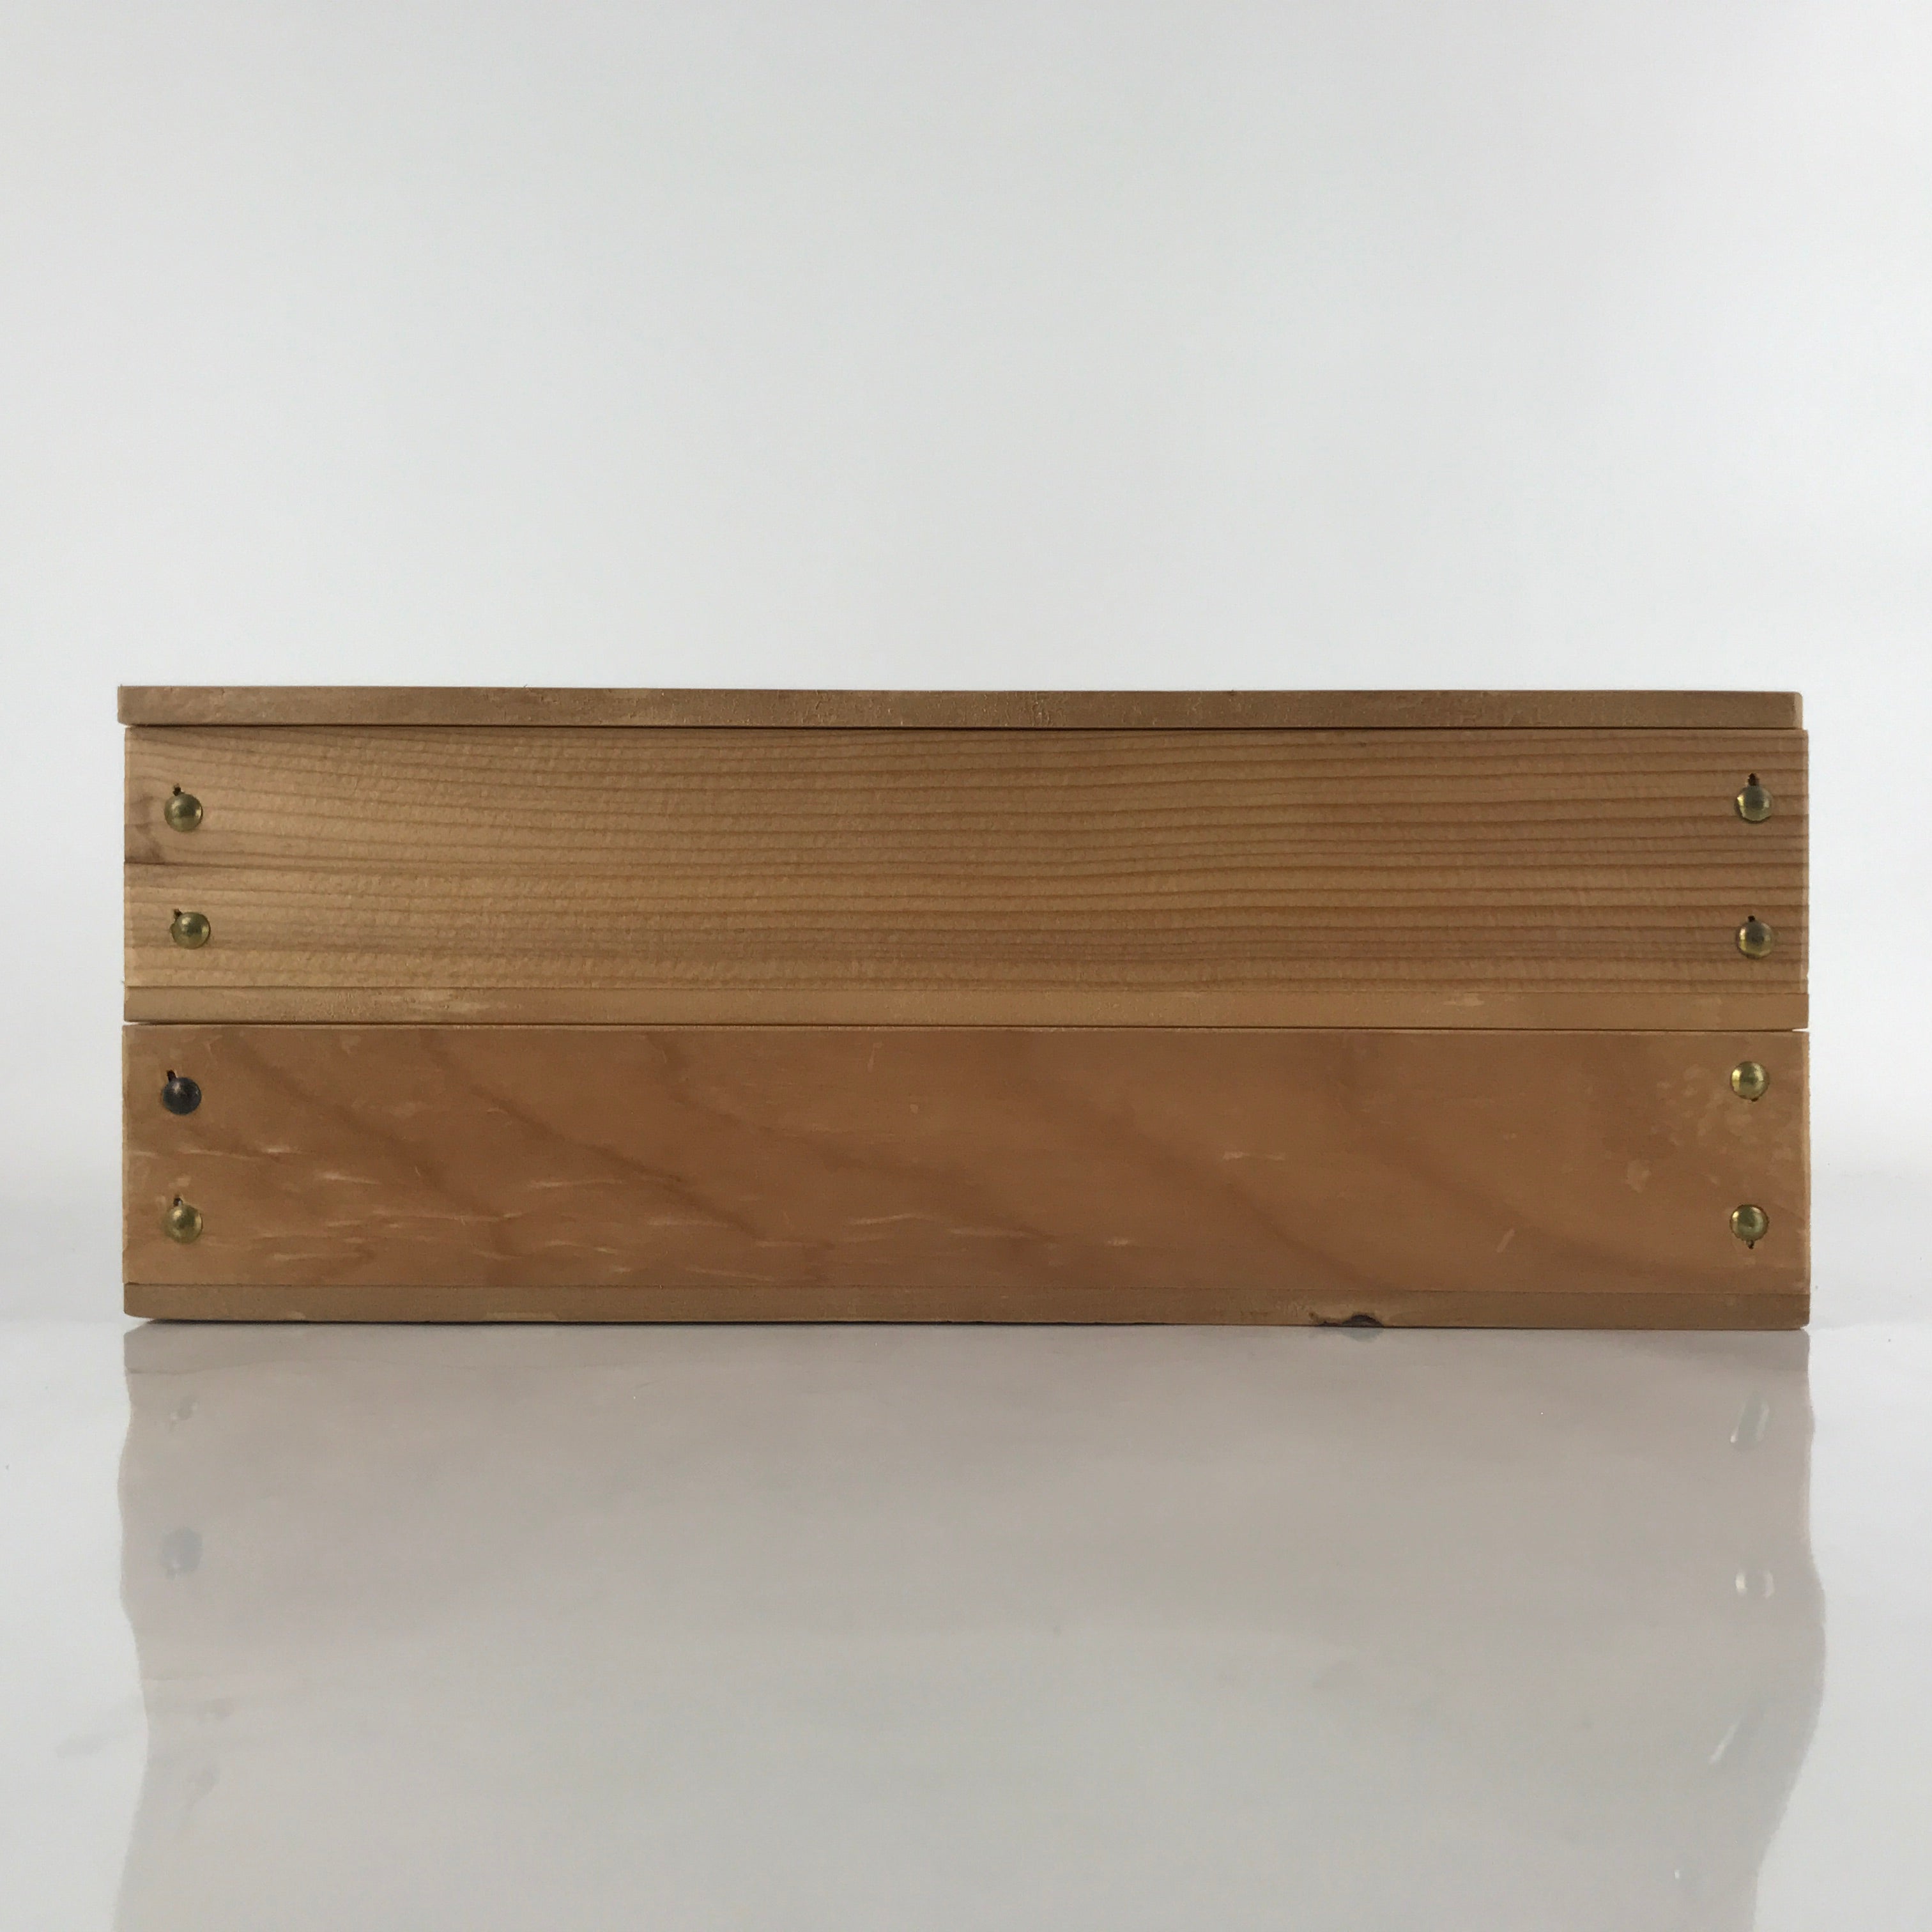 Japanese Wooden Lidded Storage Box Inside 35x25.5x6cm Stacking Set Brown X117